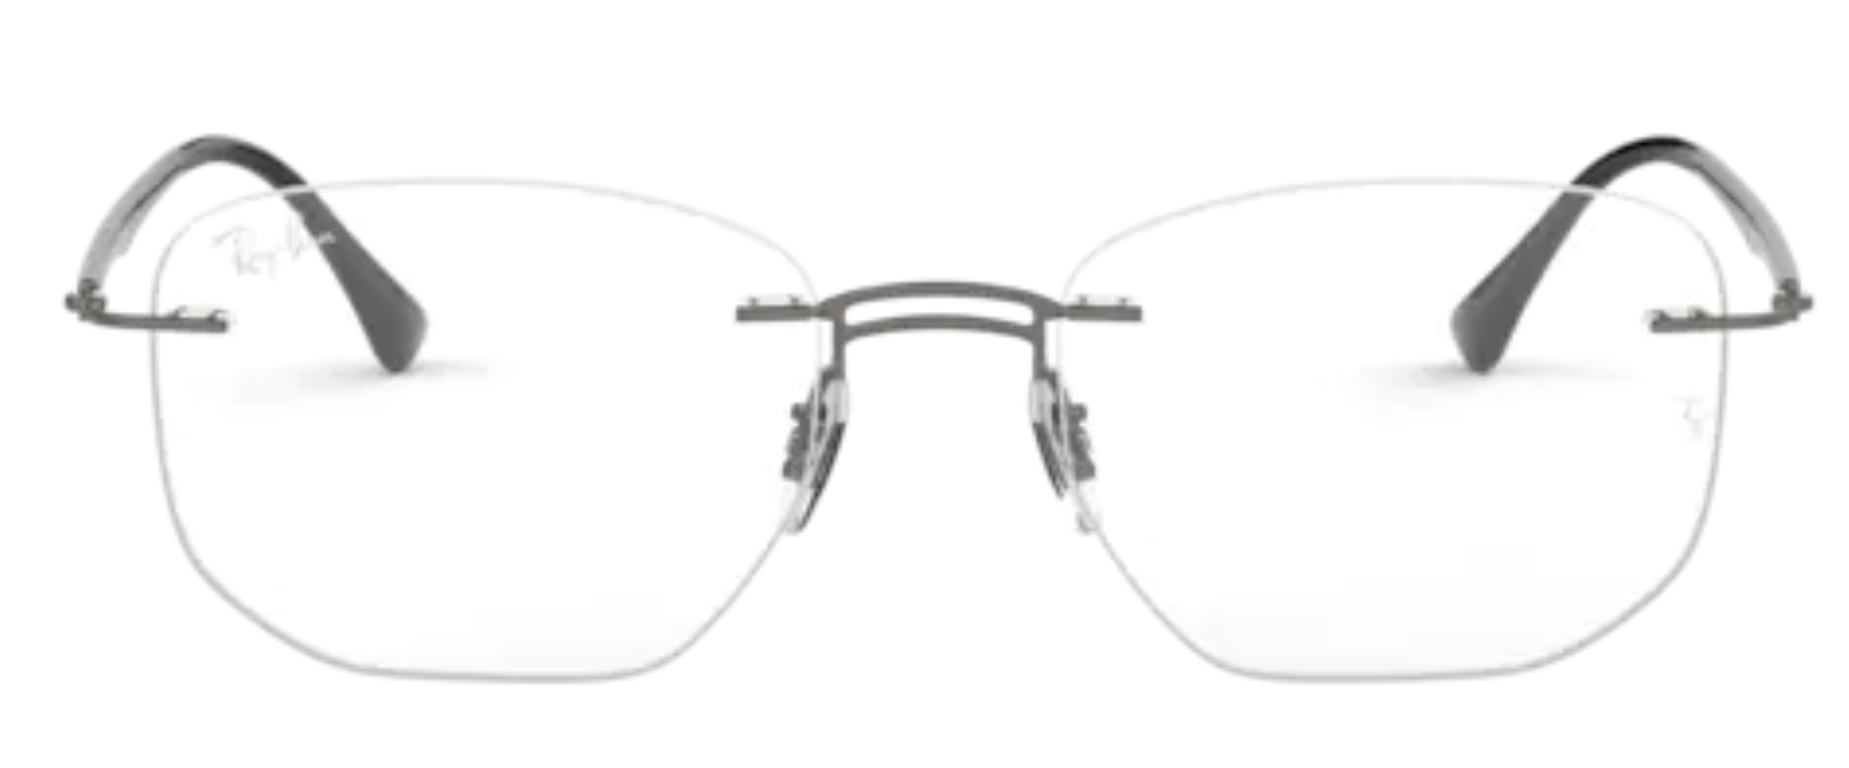 Óculos de Grau Ray Ban Sem Aro LightRay RB8757 1128 Tam. 53